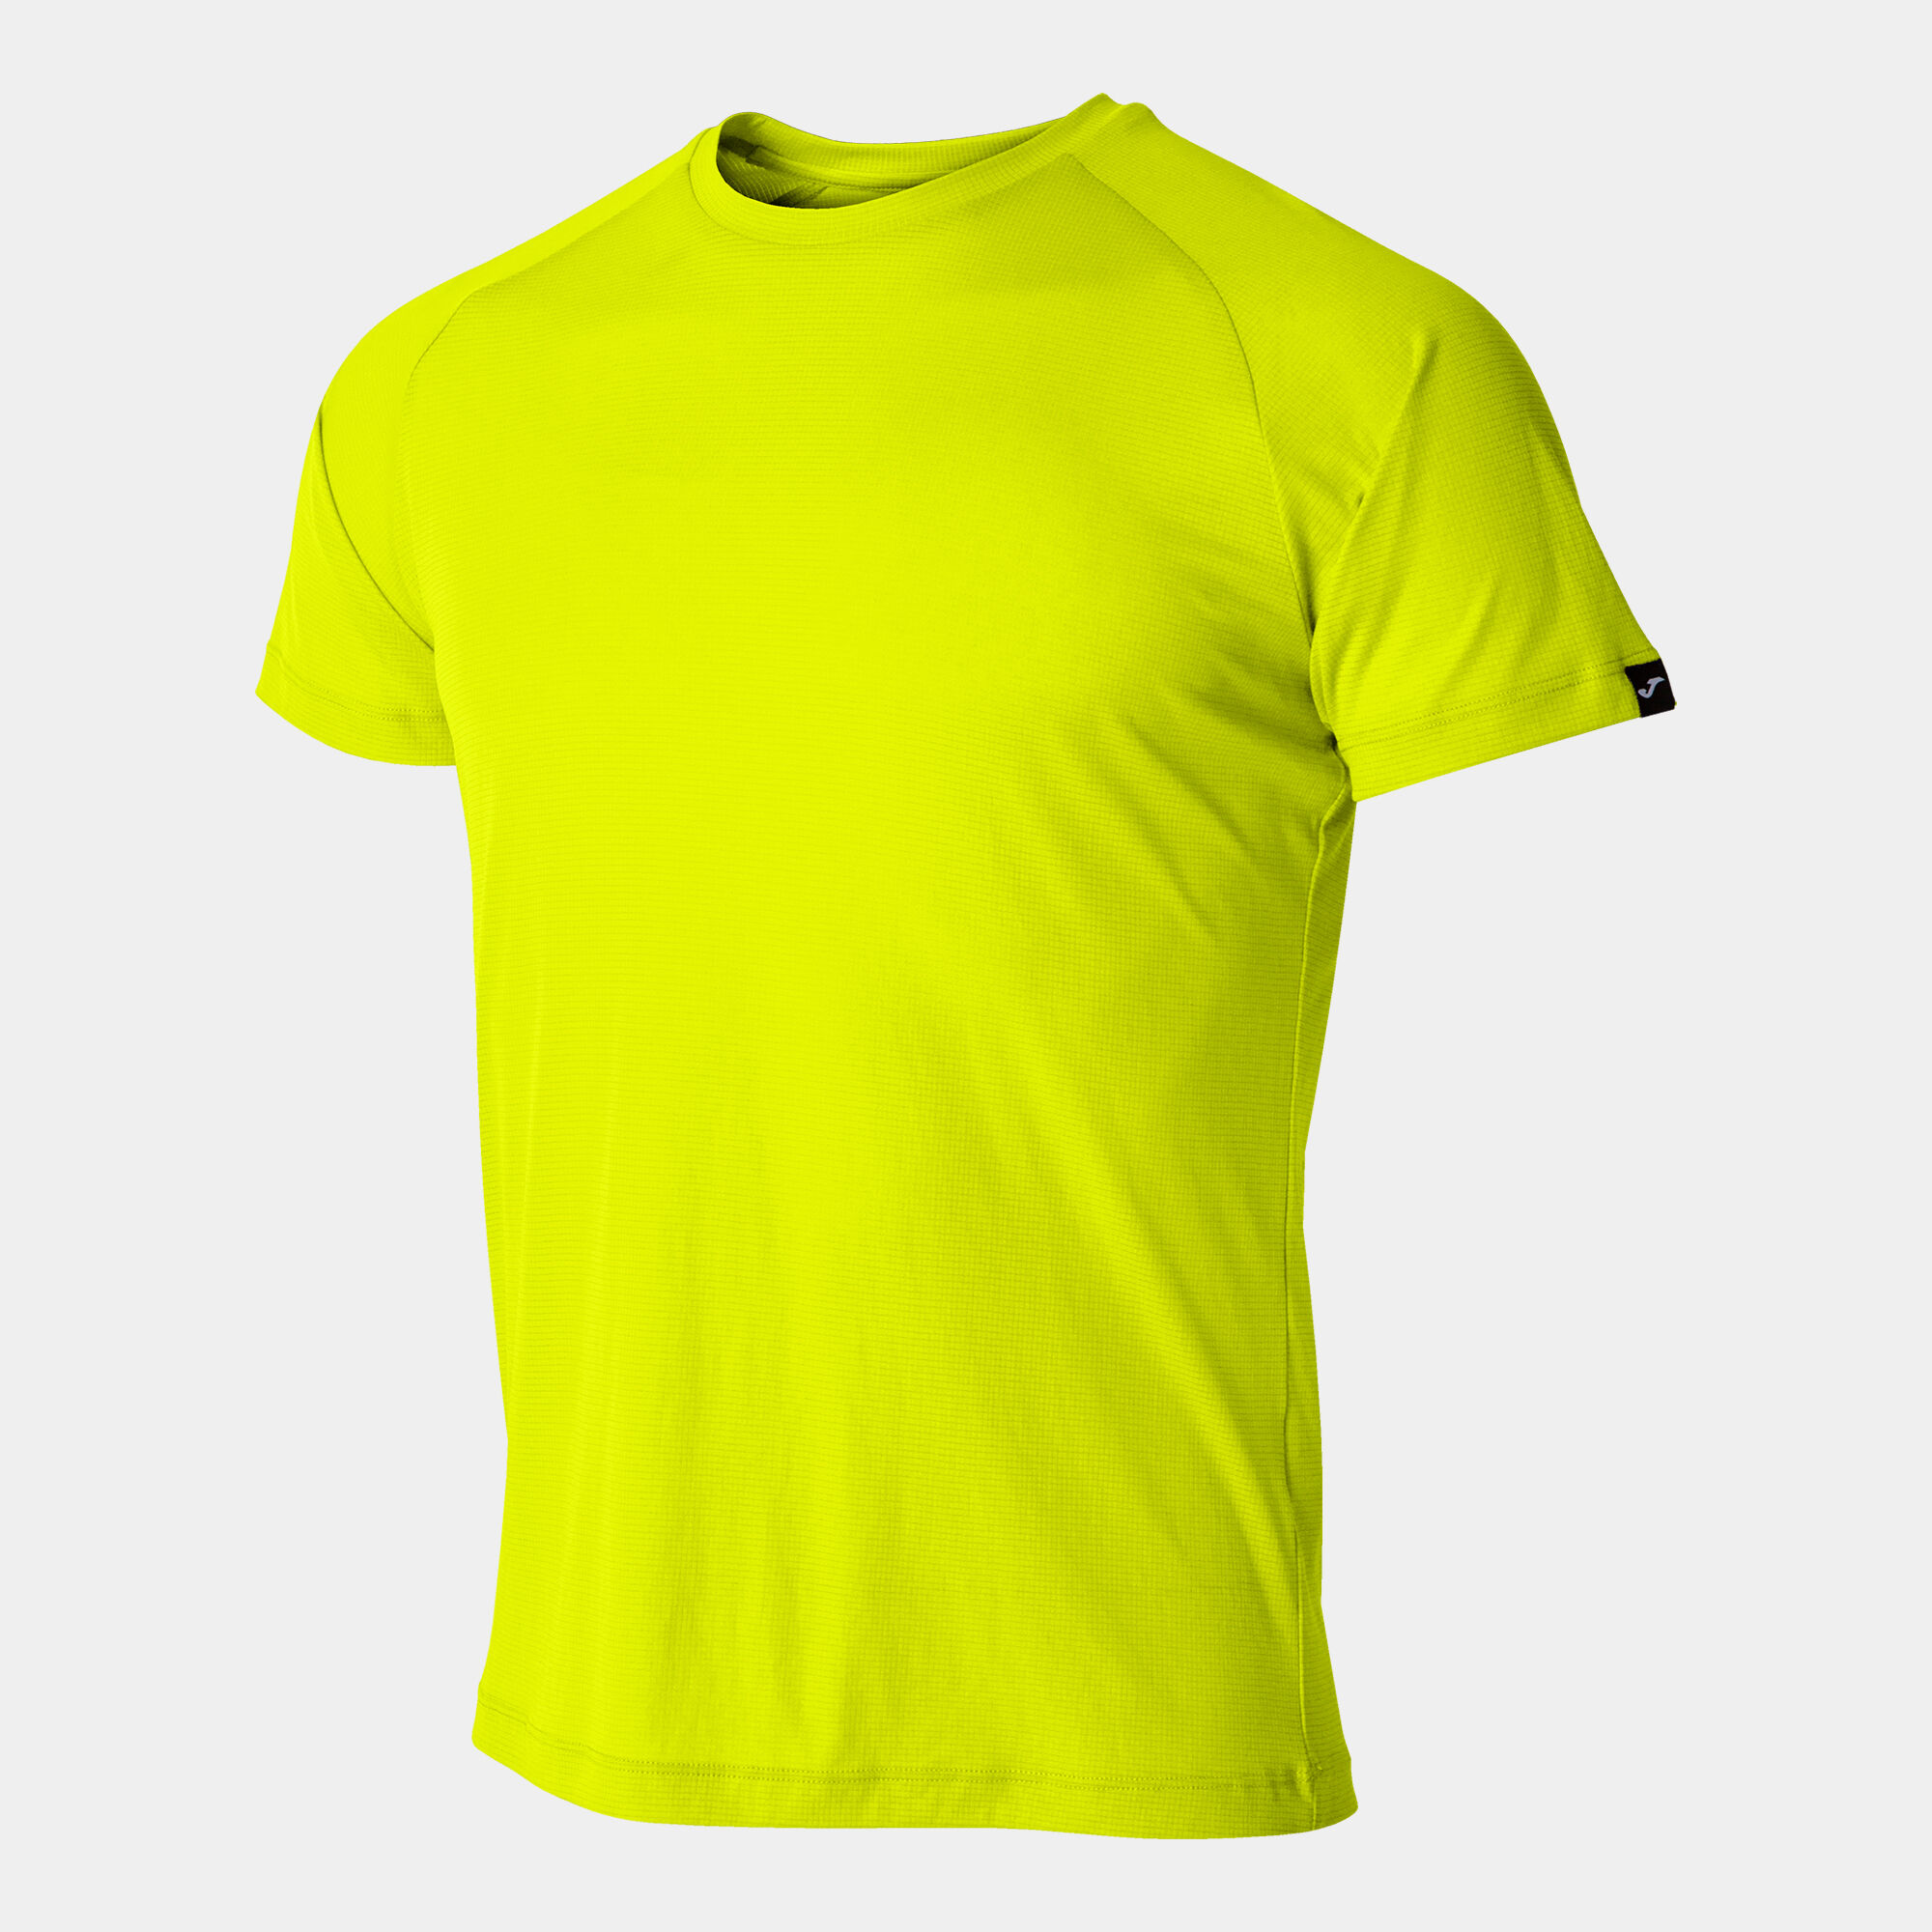 Camiseta manga corta hombre R-Combi amarillo flúor